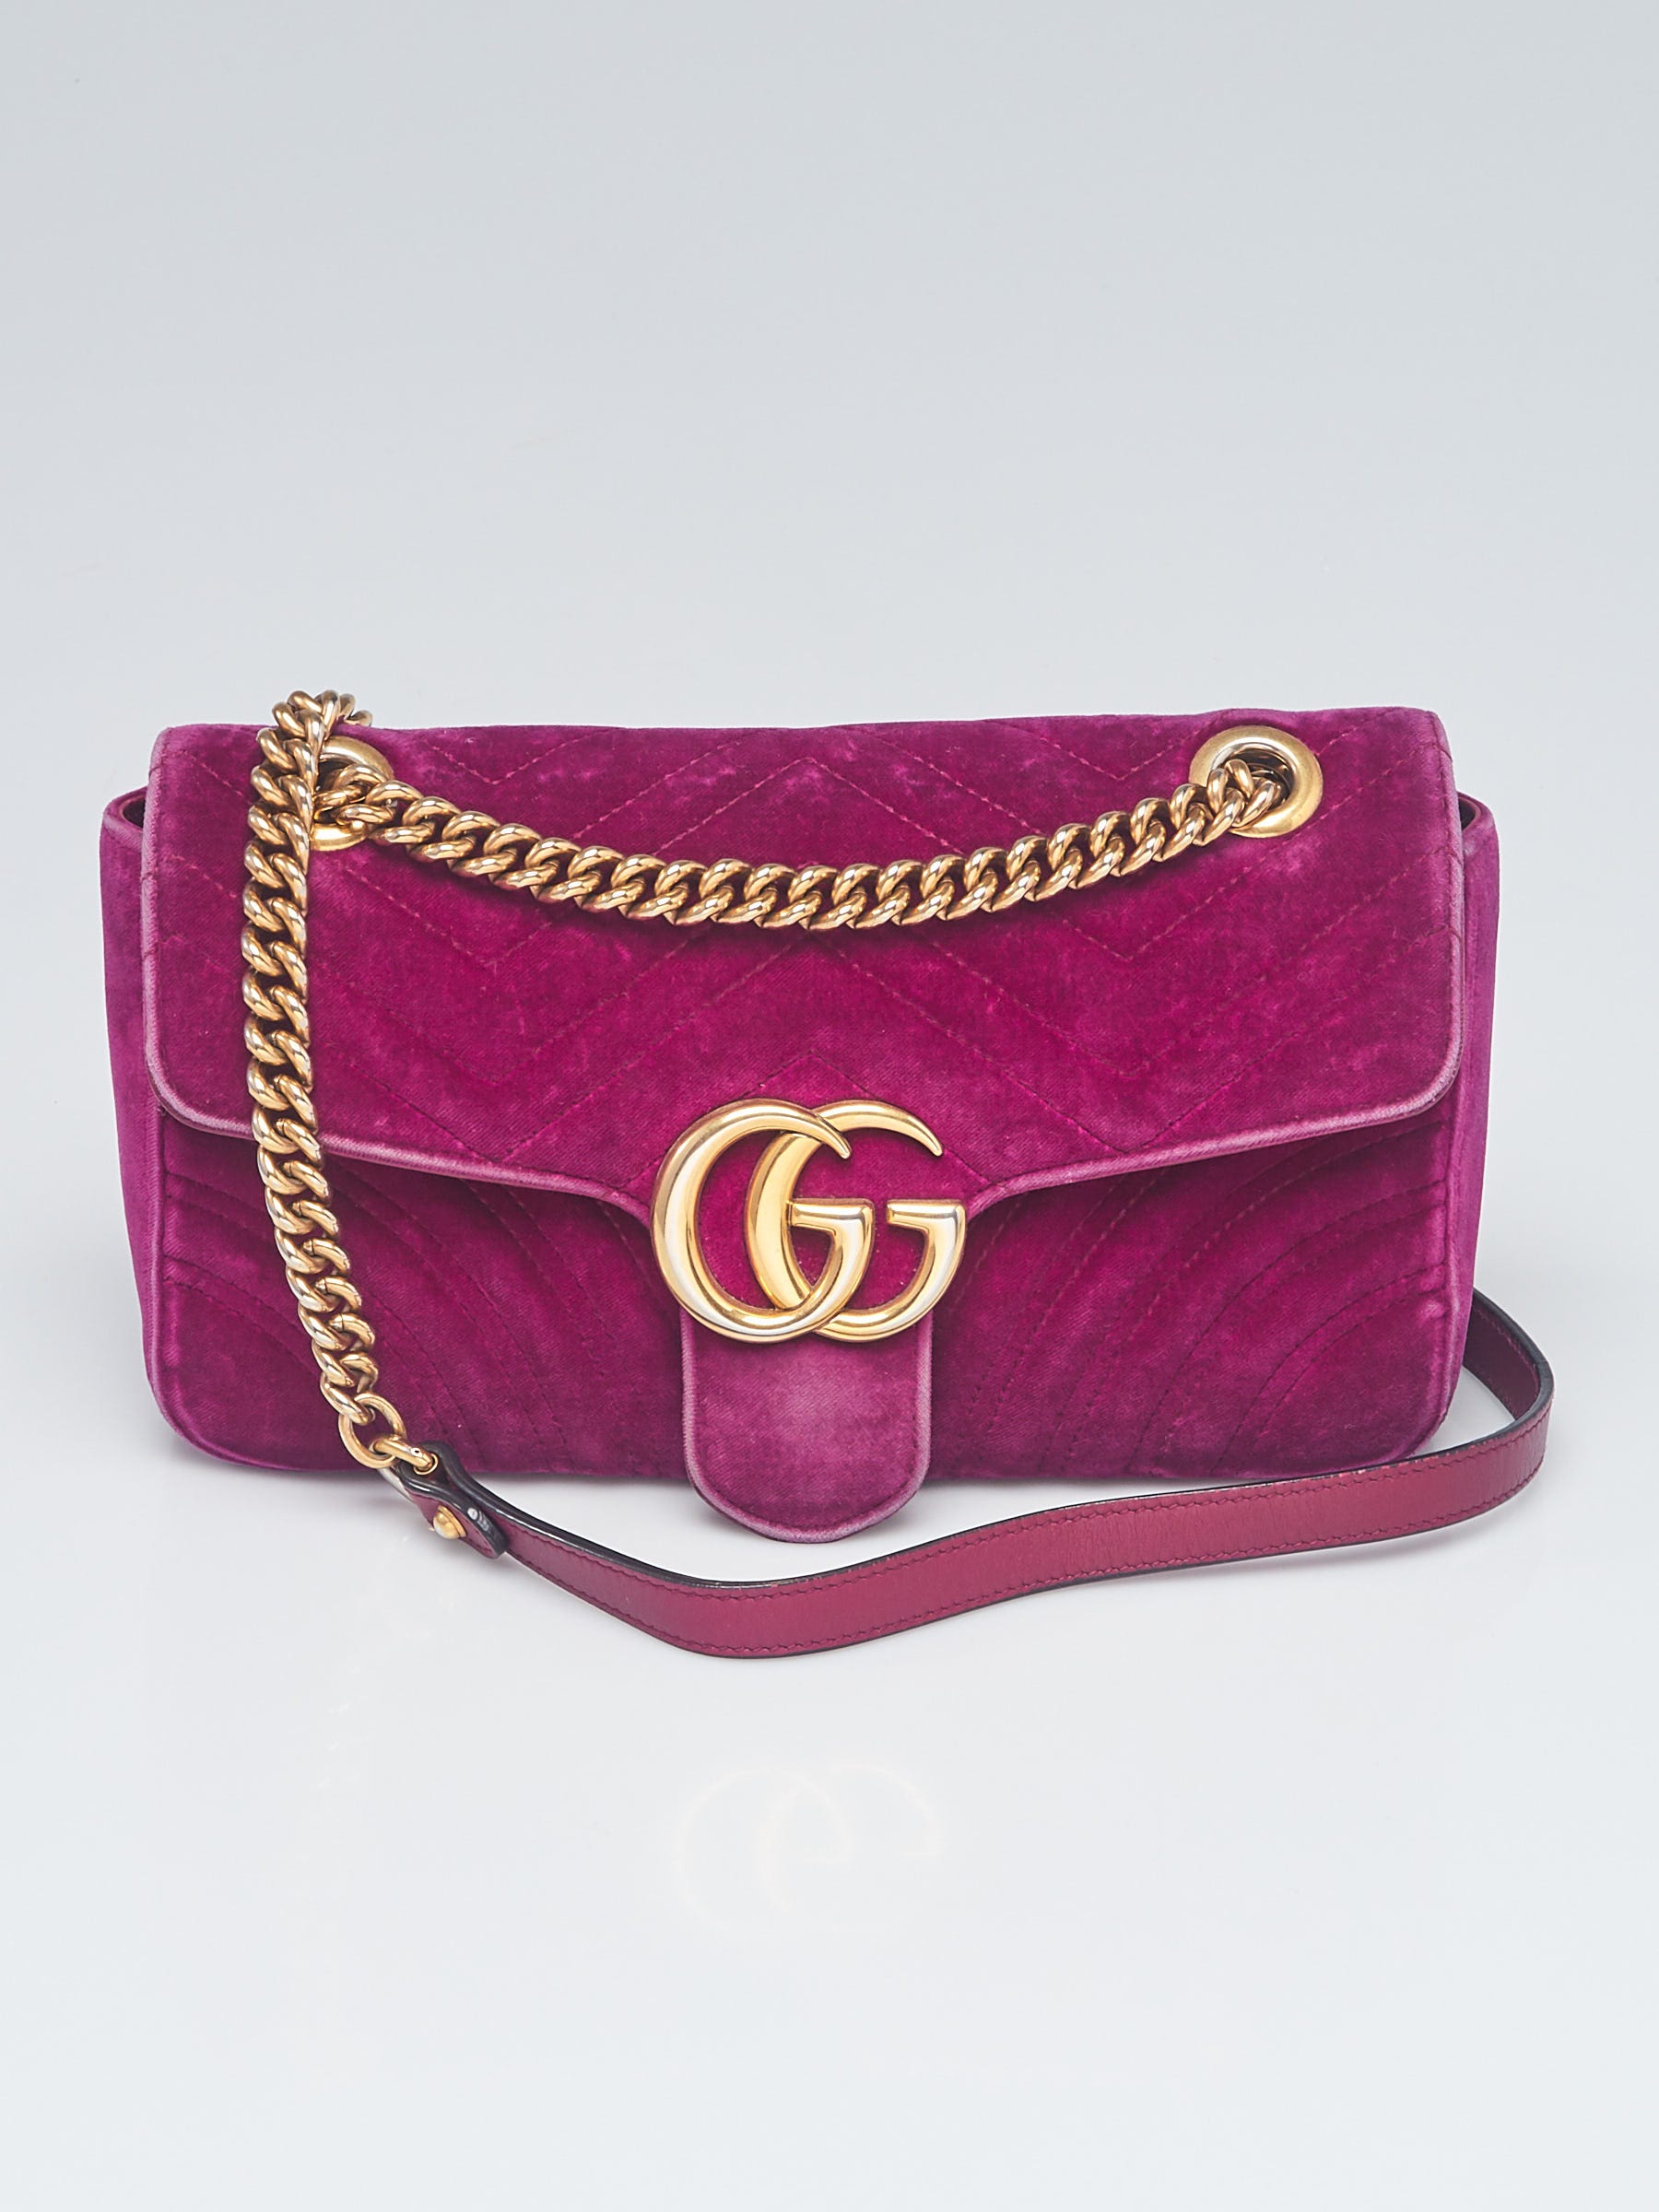 GG Marmont small shoulder bag in dark pink velvet